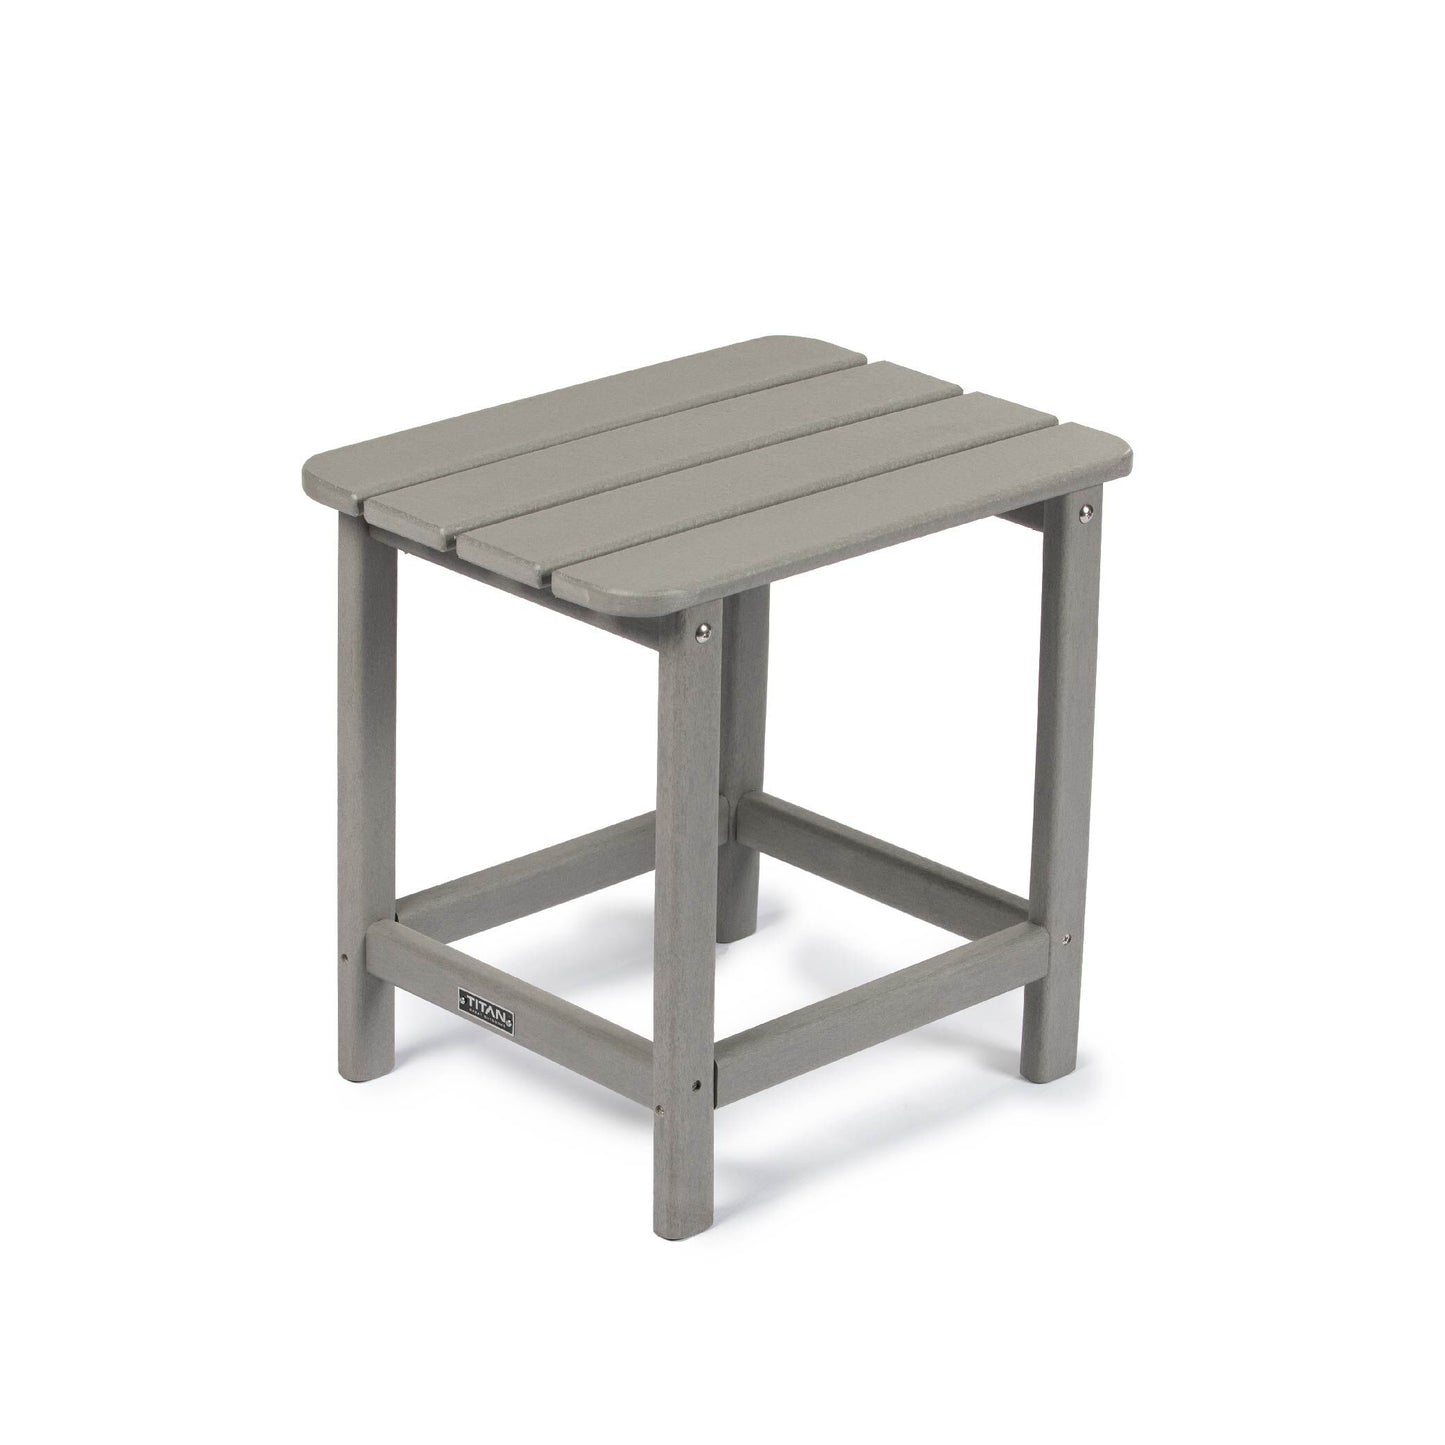 Everwood Hilltop Side Table - Table Color: Platinum Grey | Platinum Grey - view 9